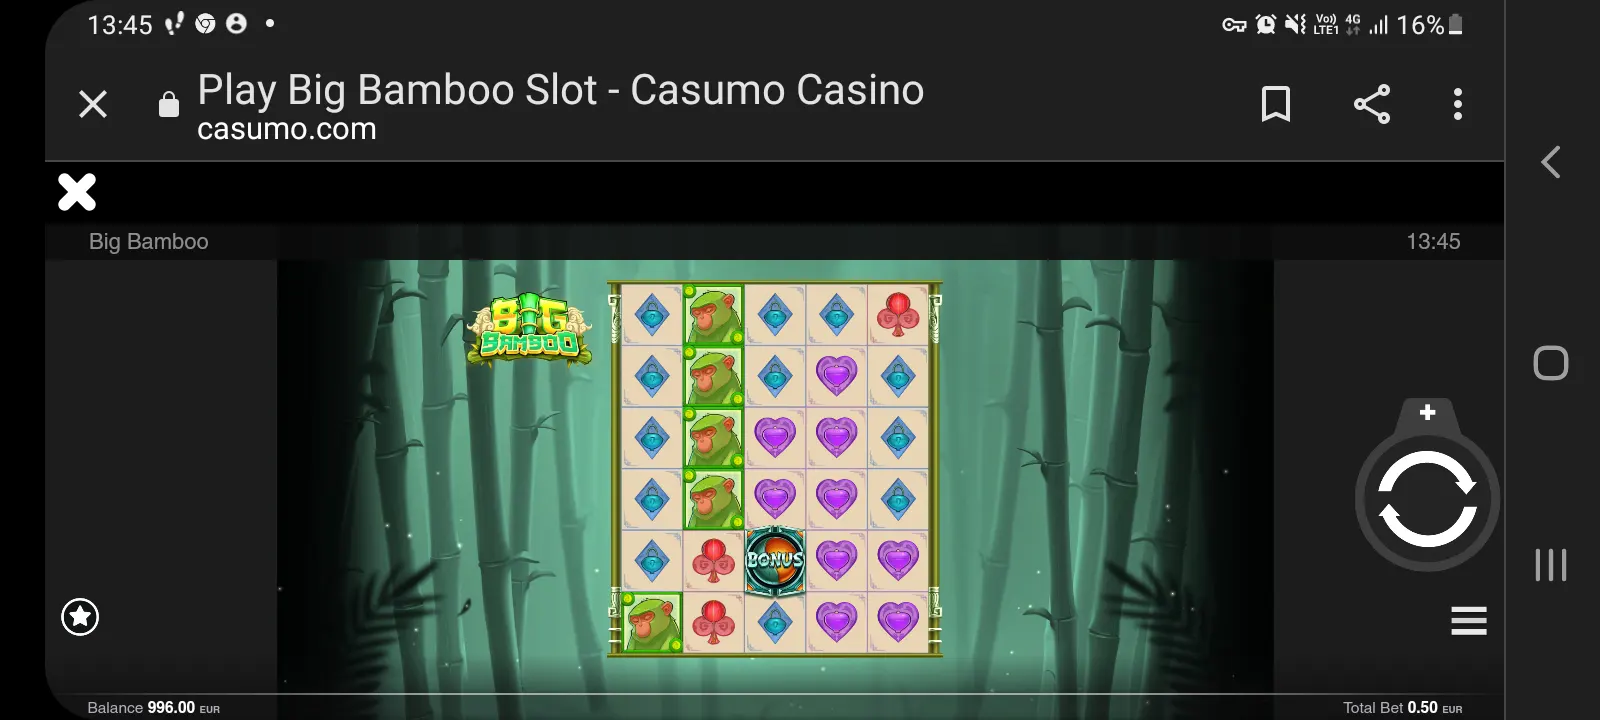 Casumo casino app screenshot 2